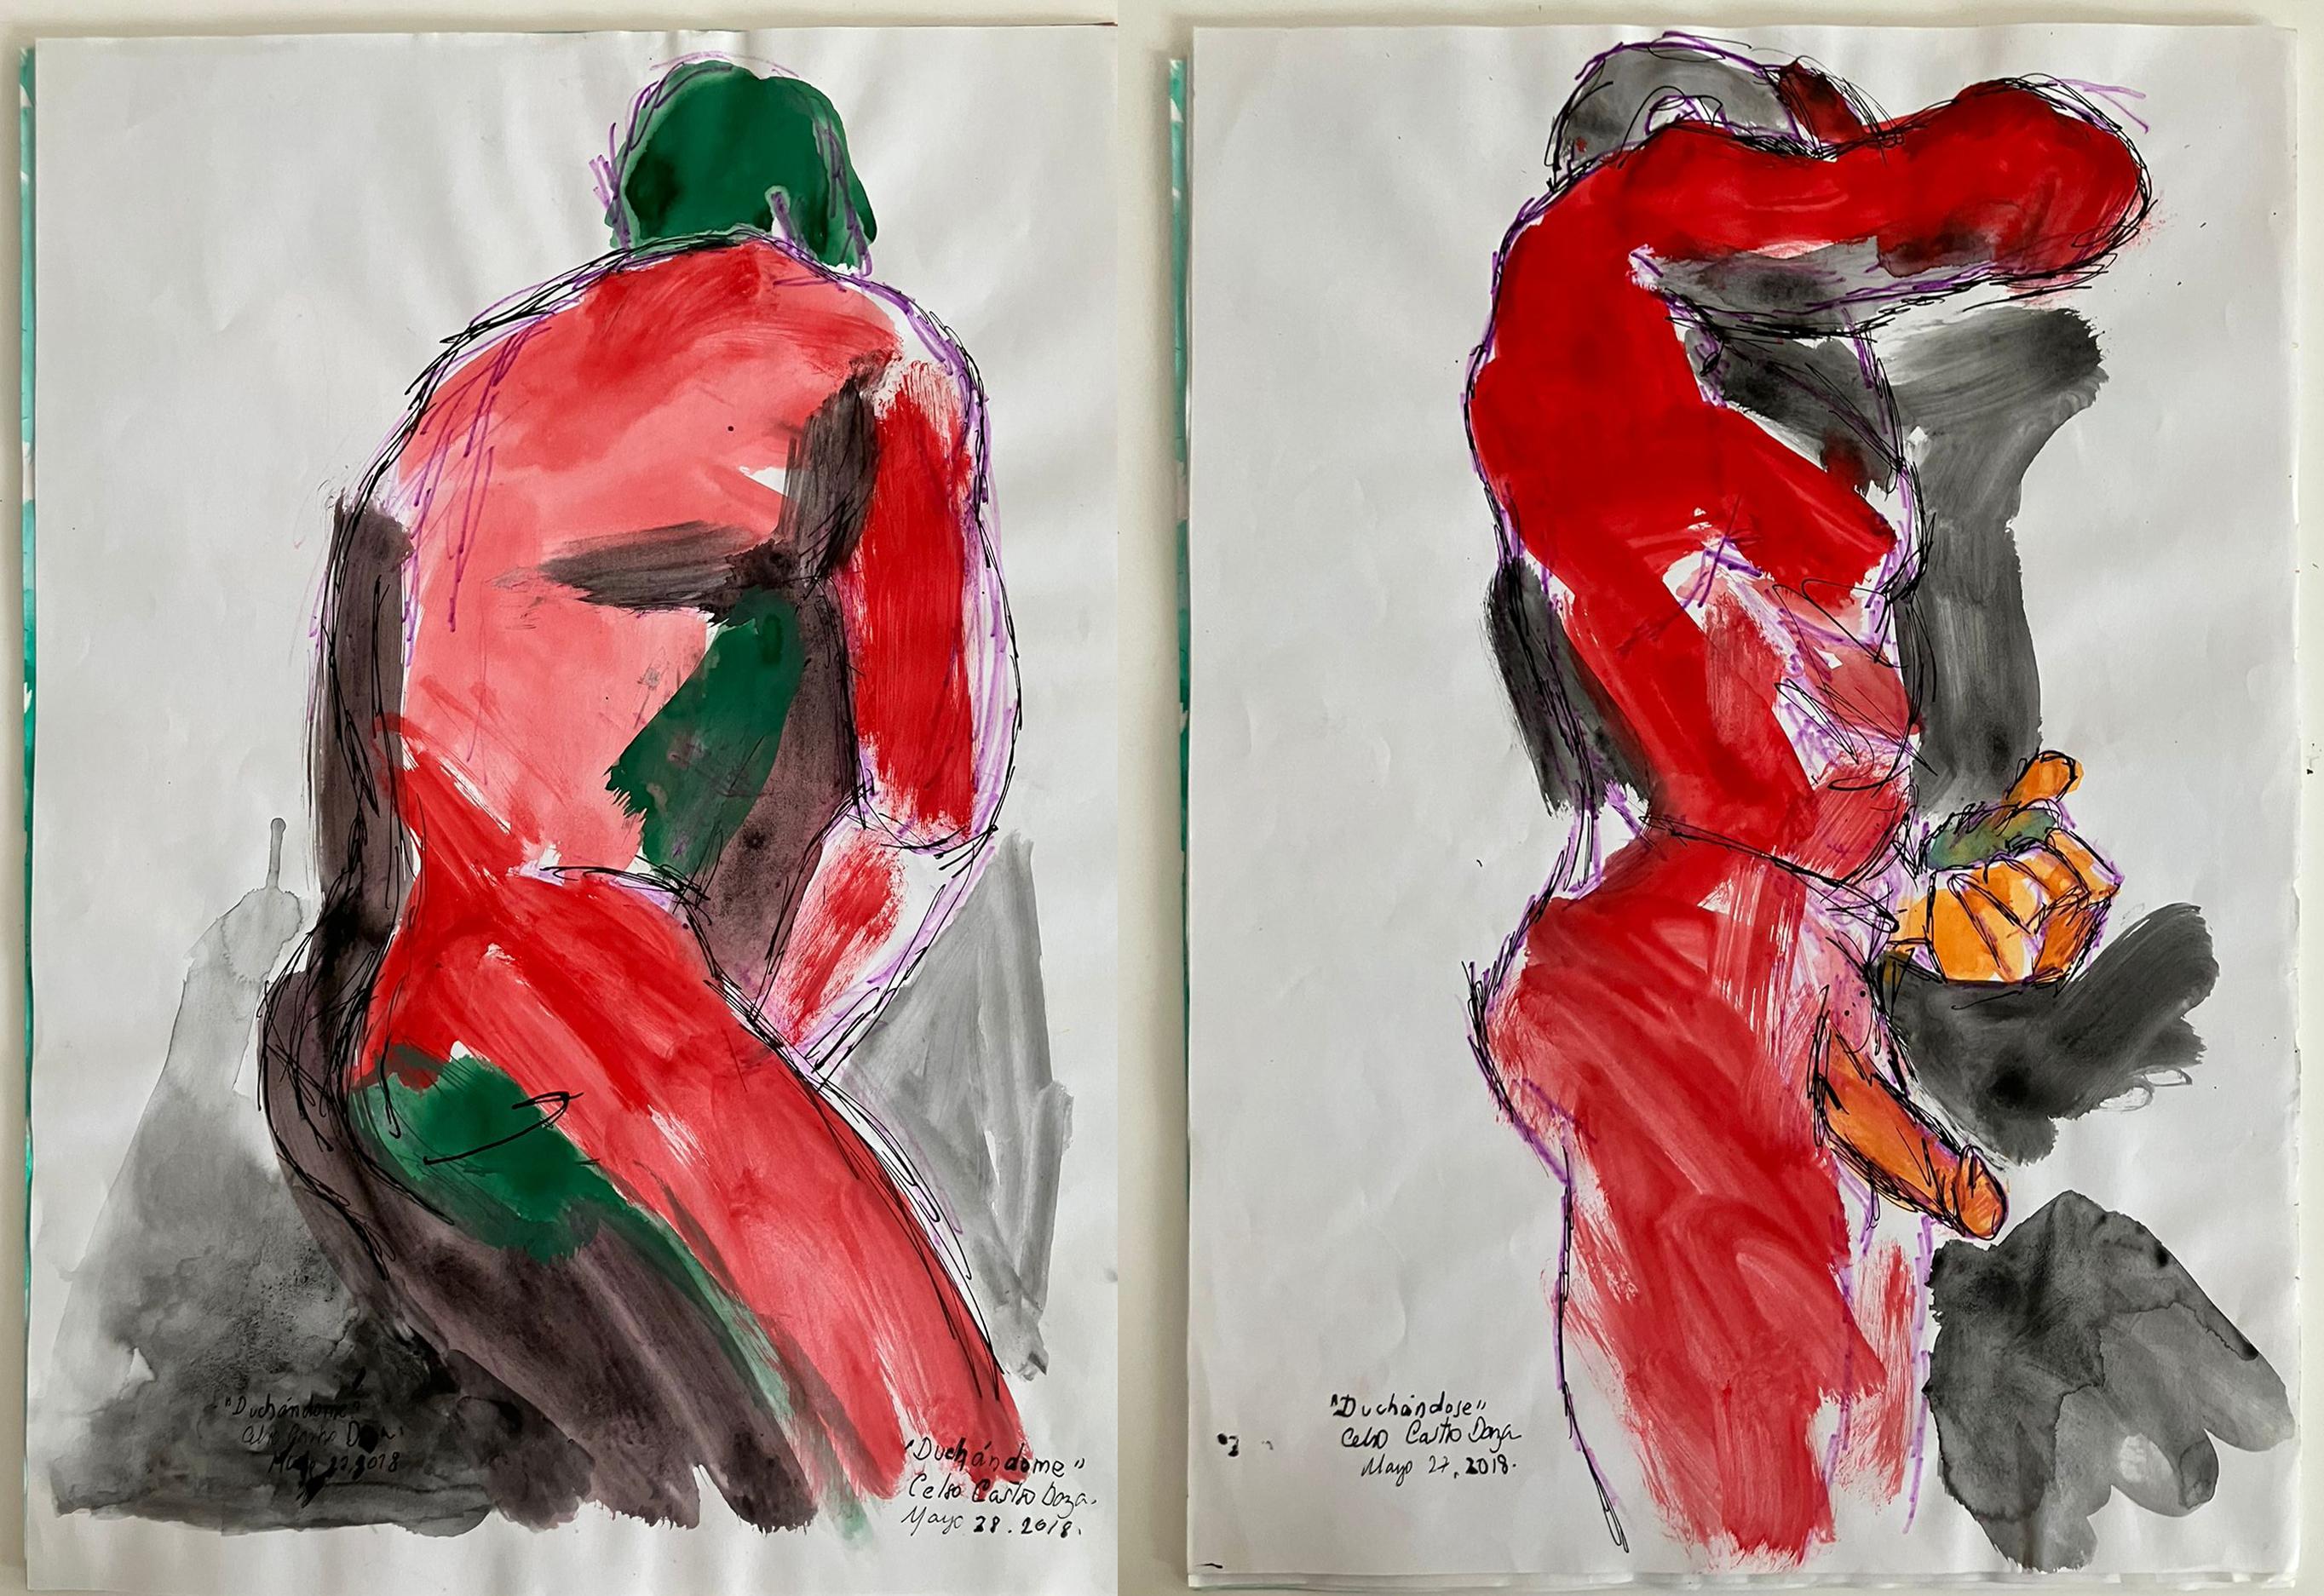 "Duchándome, May 28th" and "Duchándose, May 27th", Watercolor Nudes